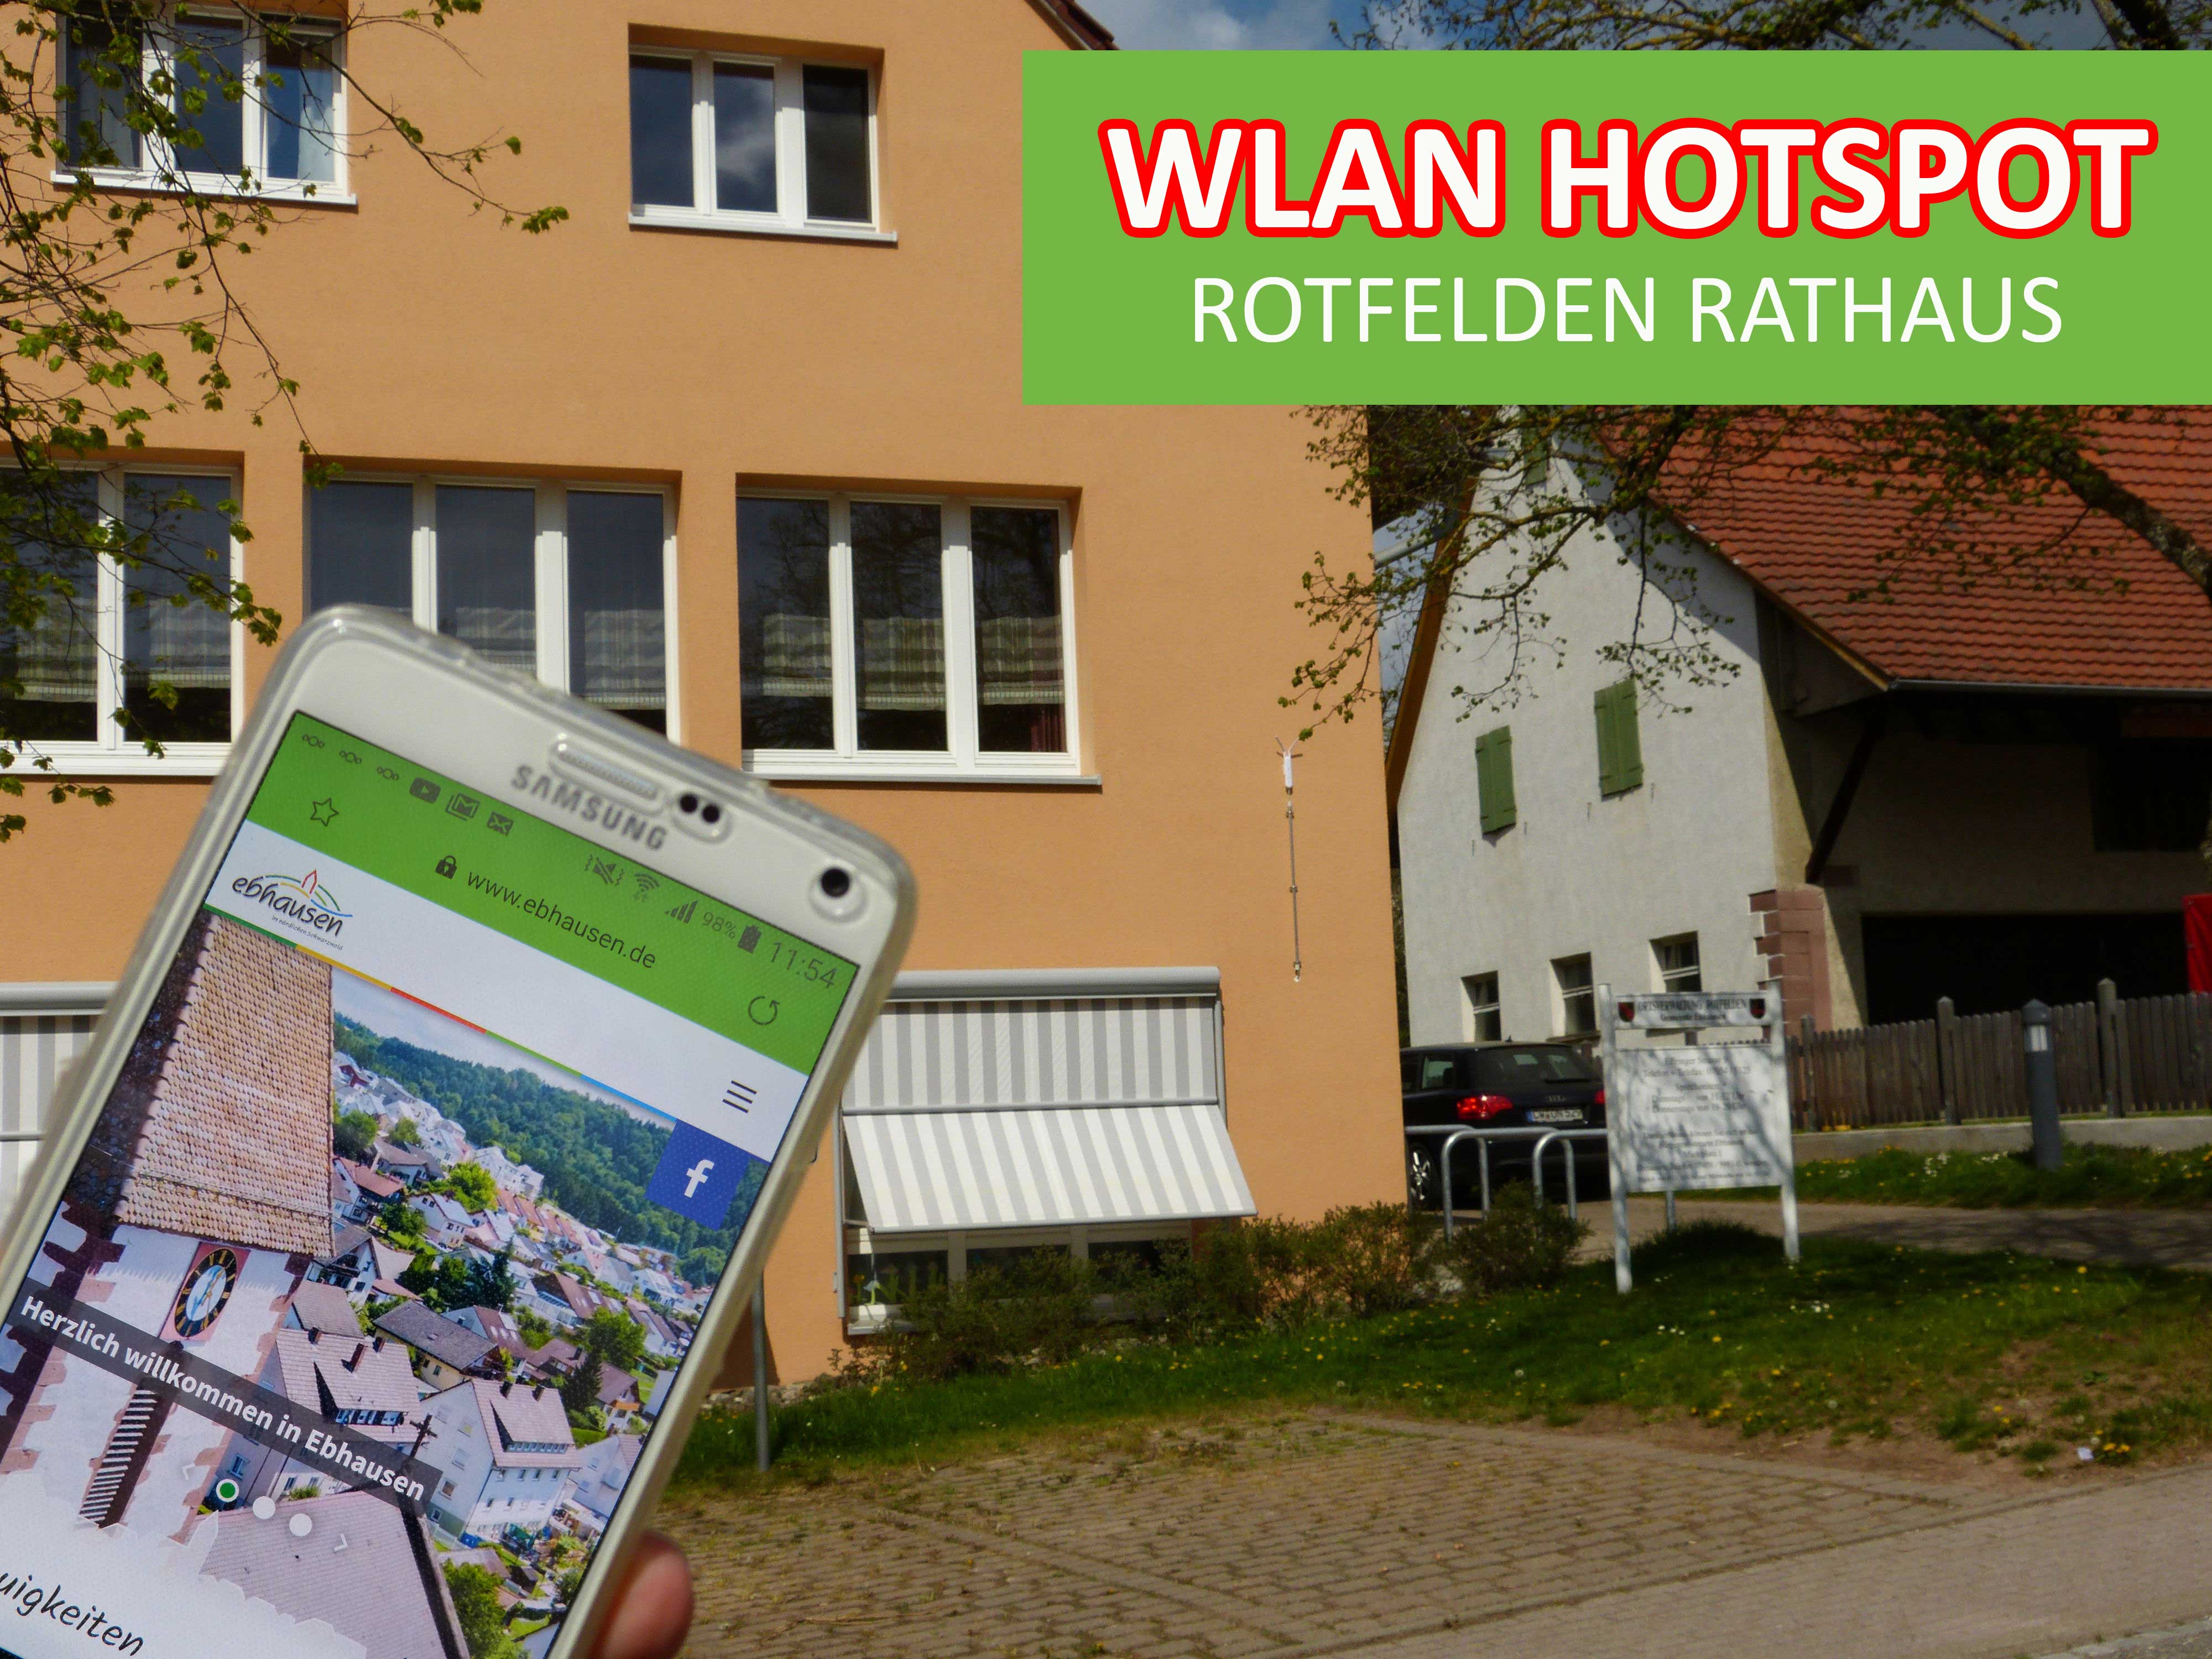 WLAN Hotspot Rotfelden